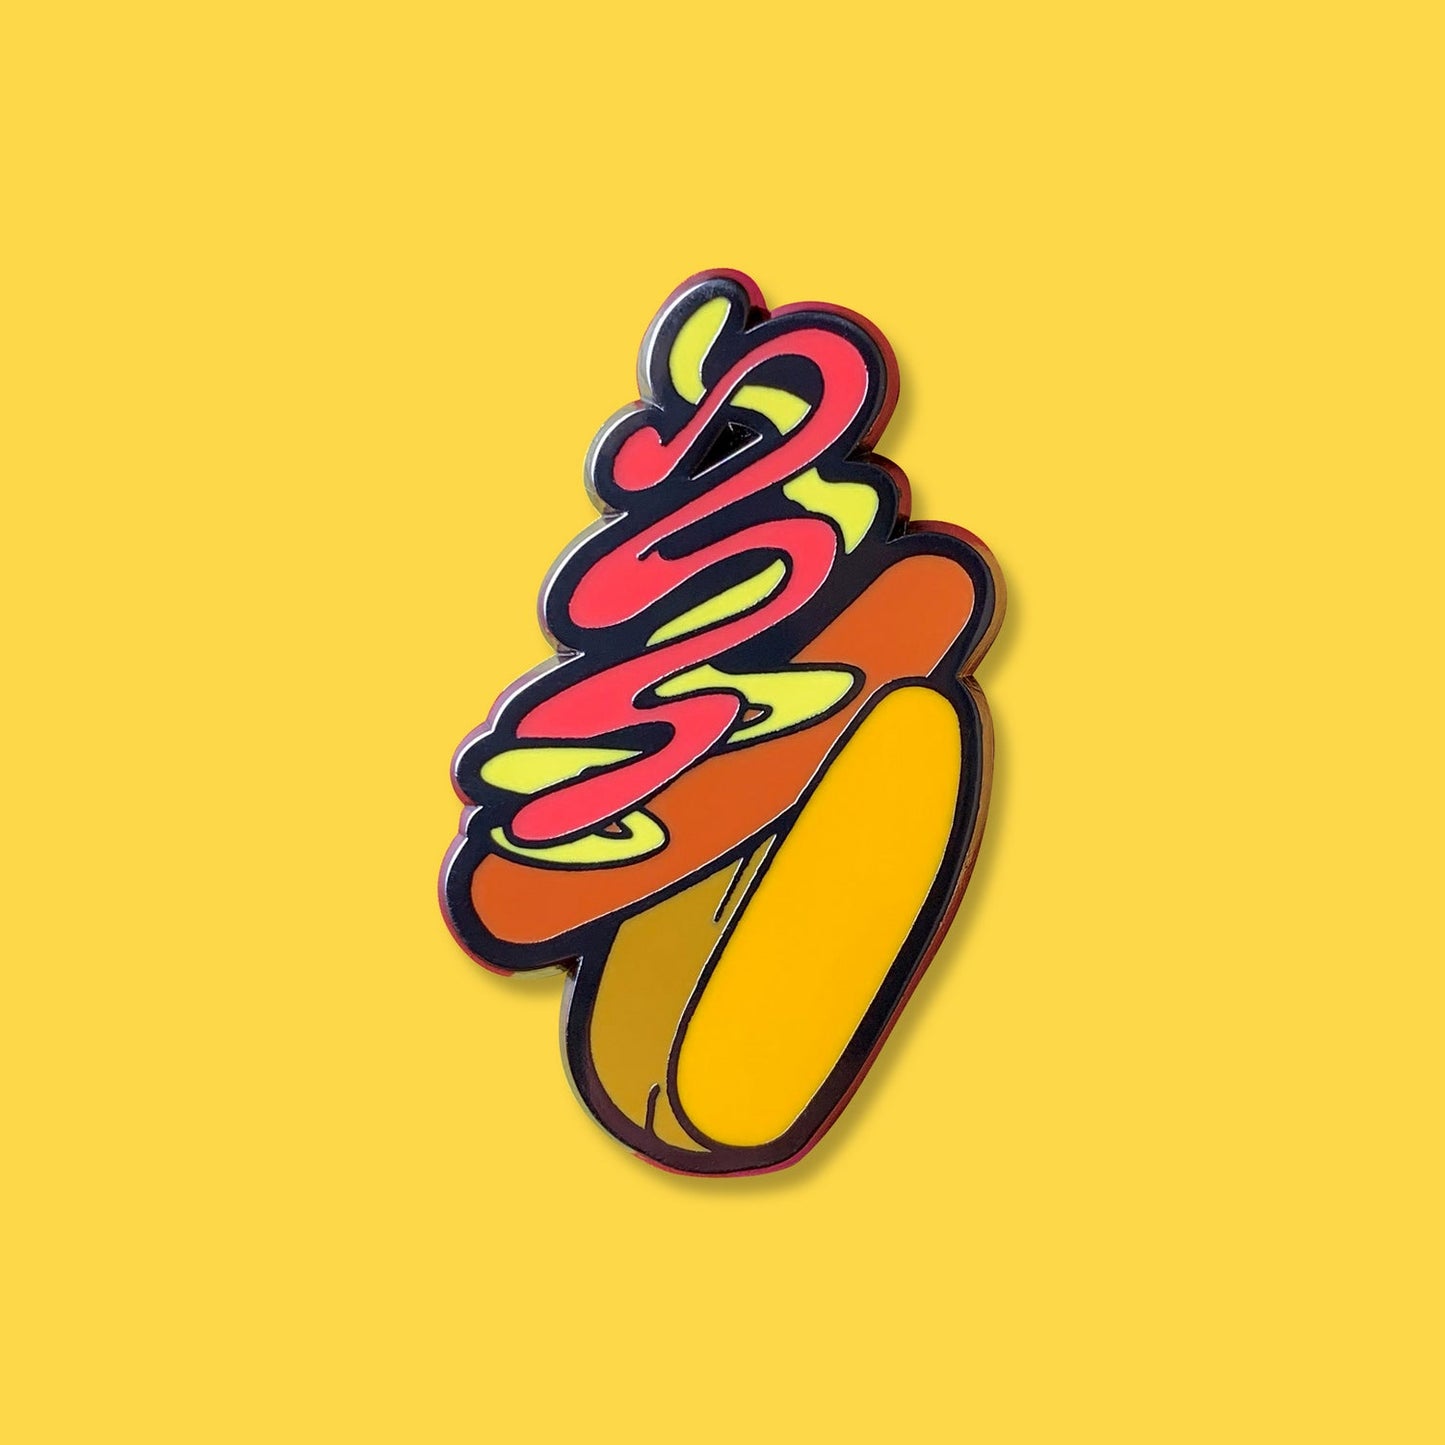 Hot Dog Food Frenzy Enamel Pin by Really Good Pins